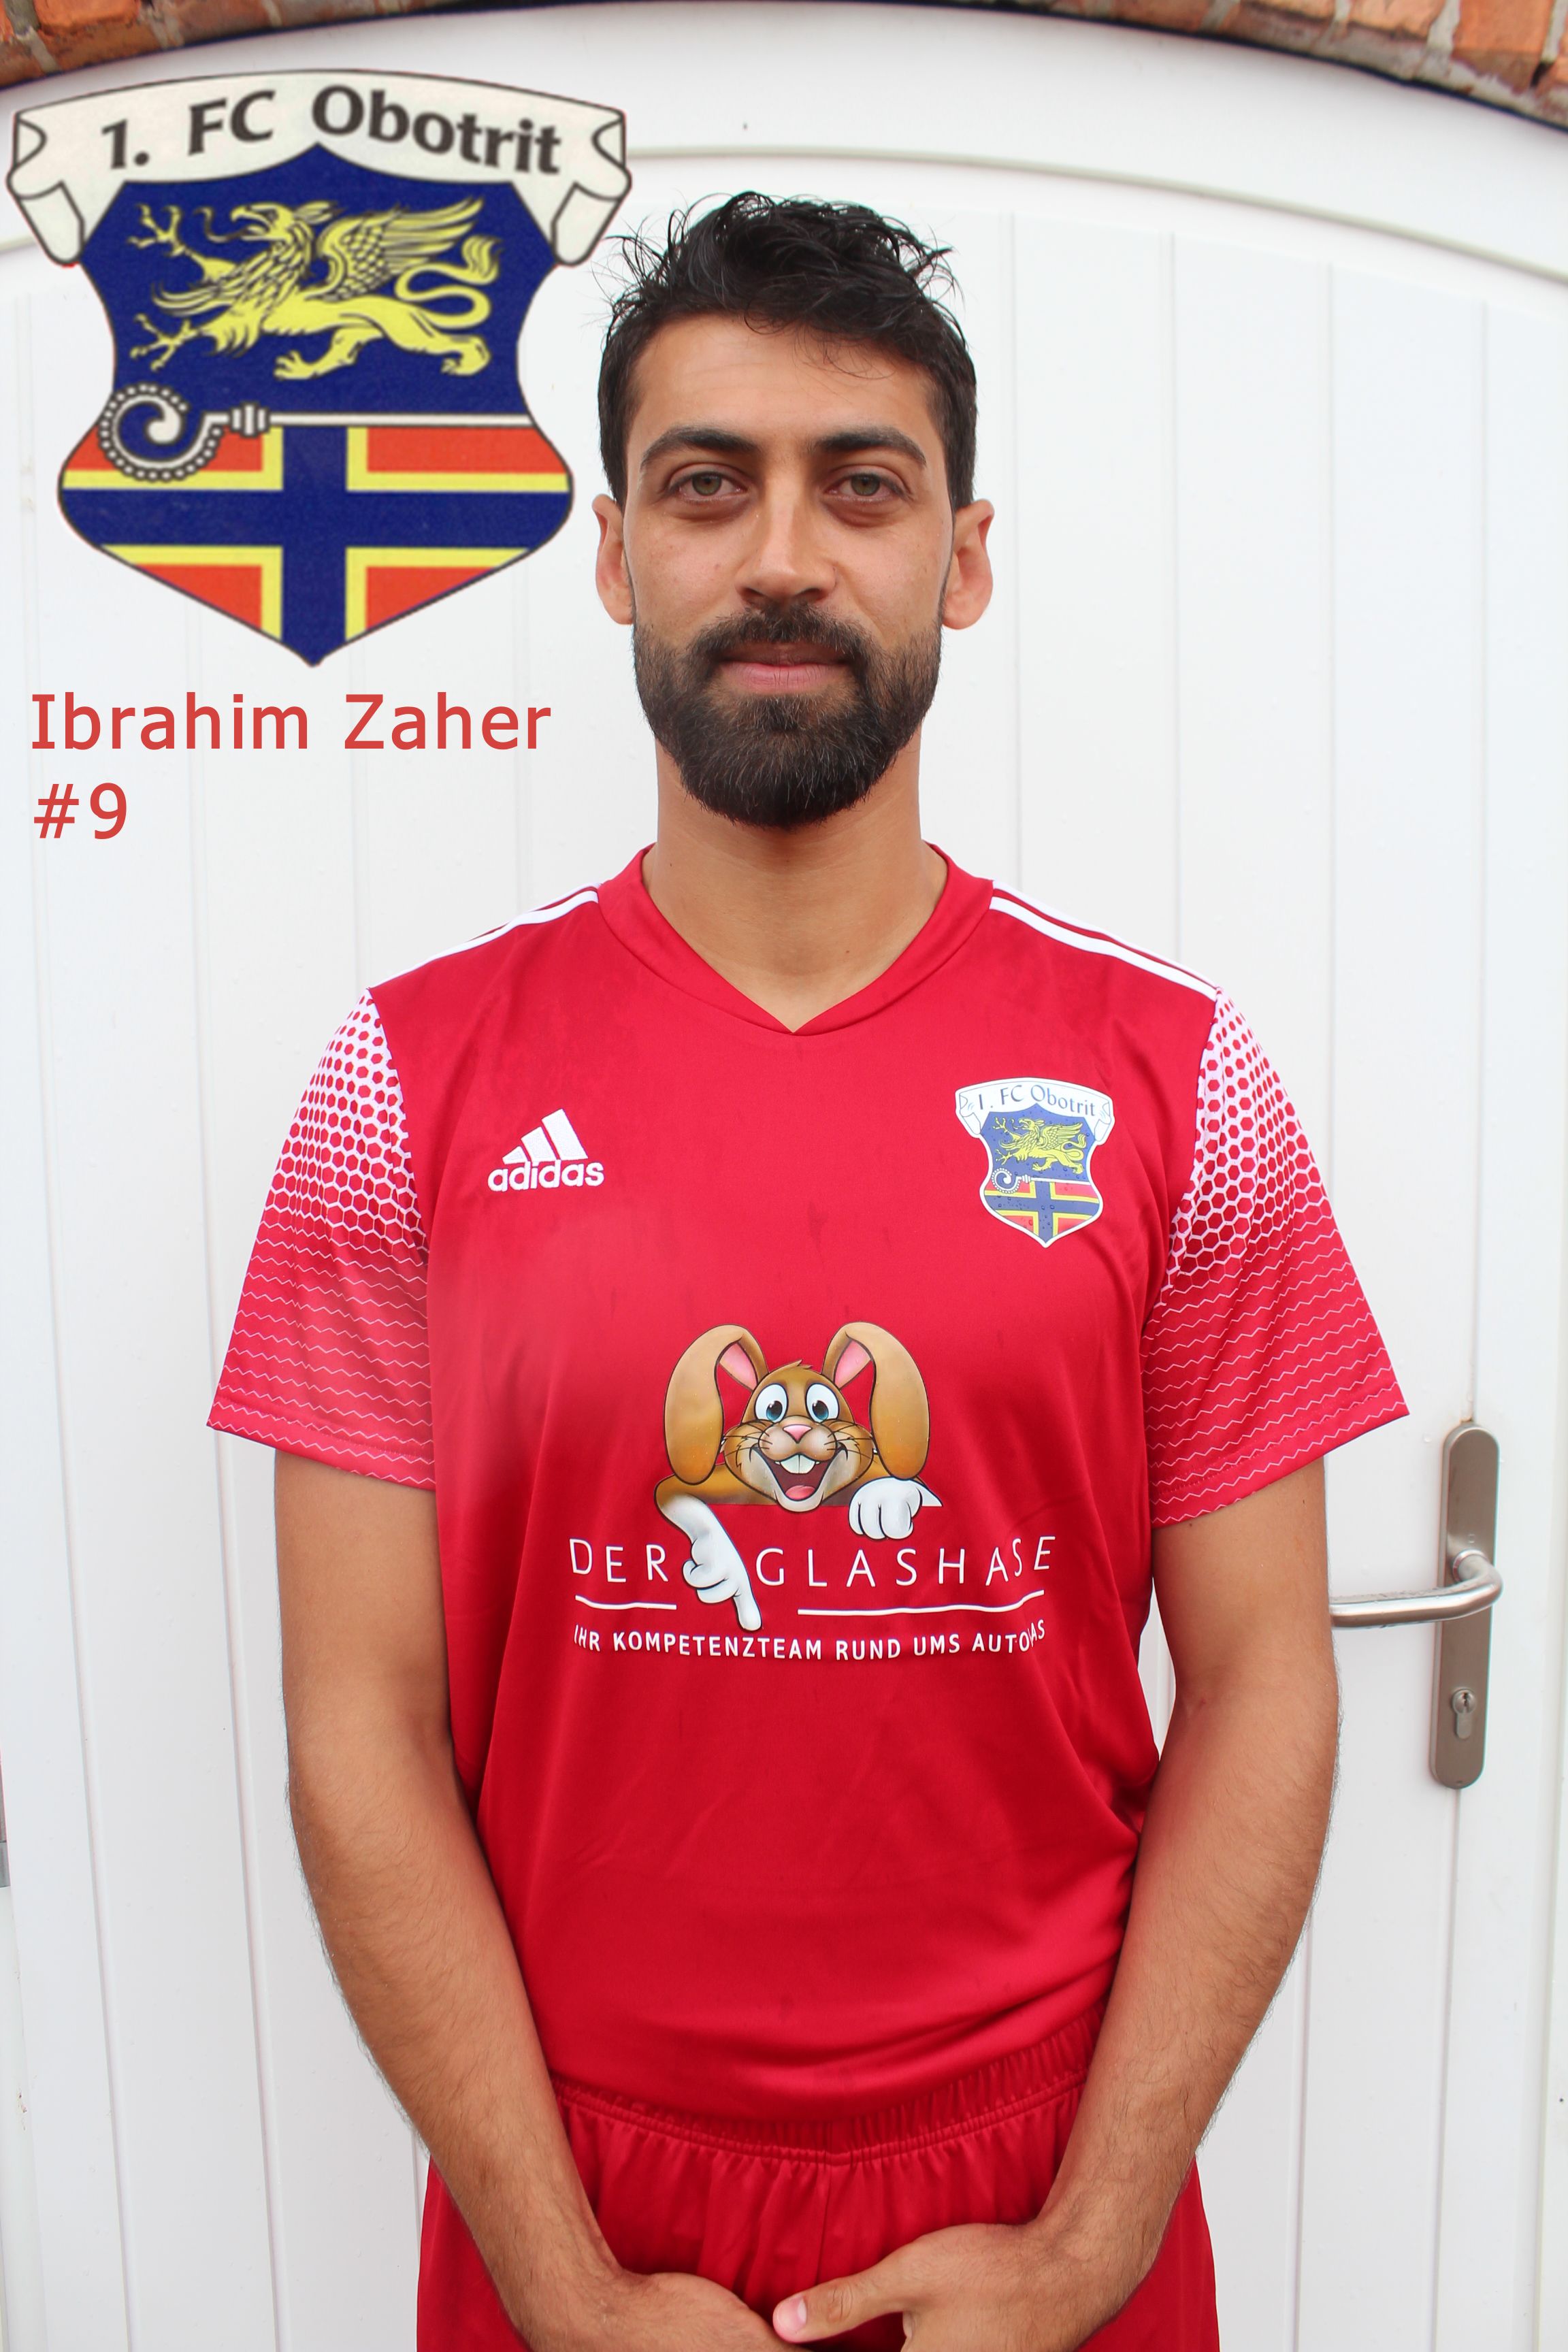 Ibrahim Zaher